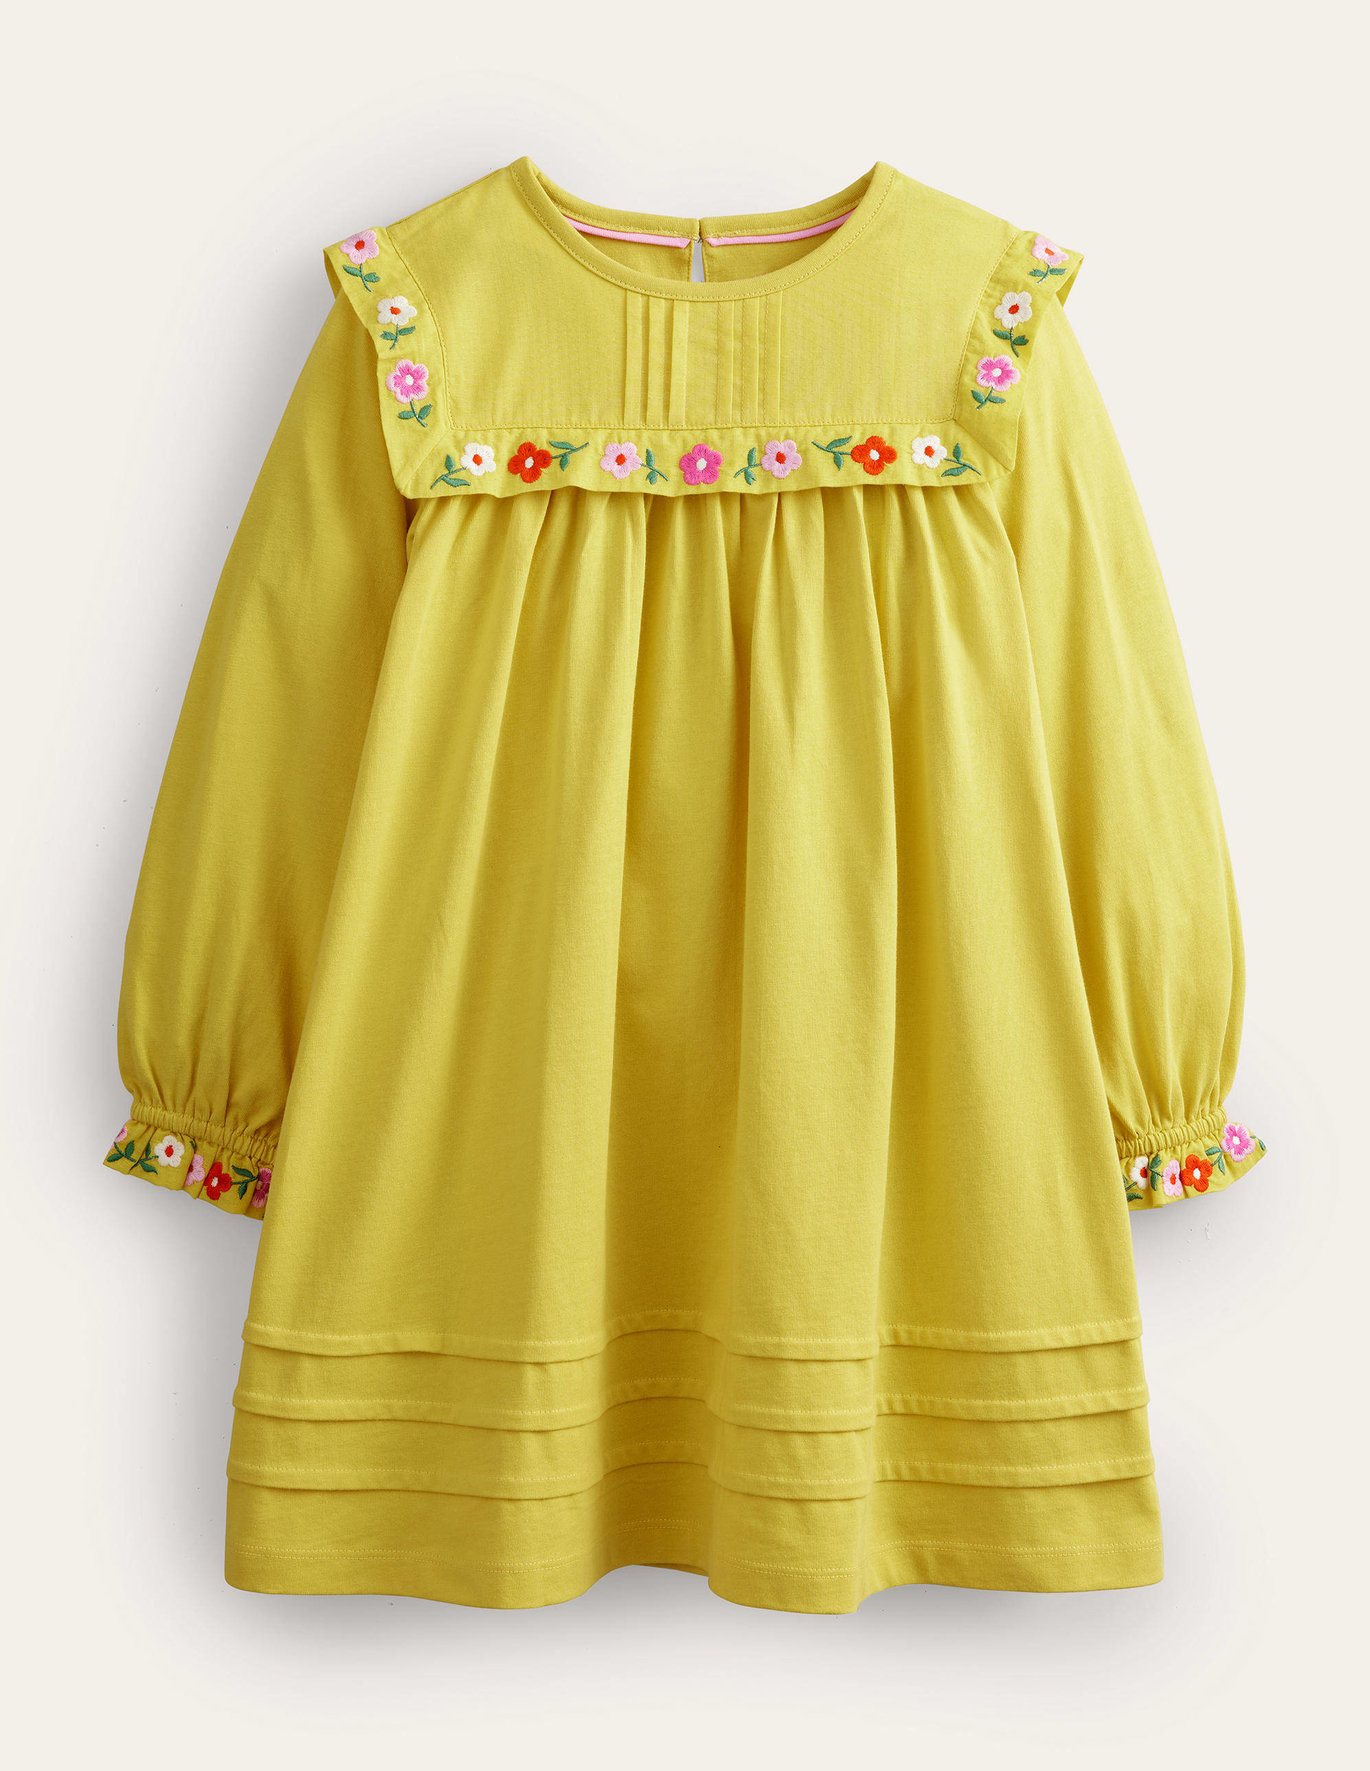 Boden Embroidered Yoke Jersey Dress - Sweetcorn Yellow